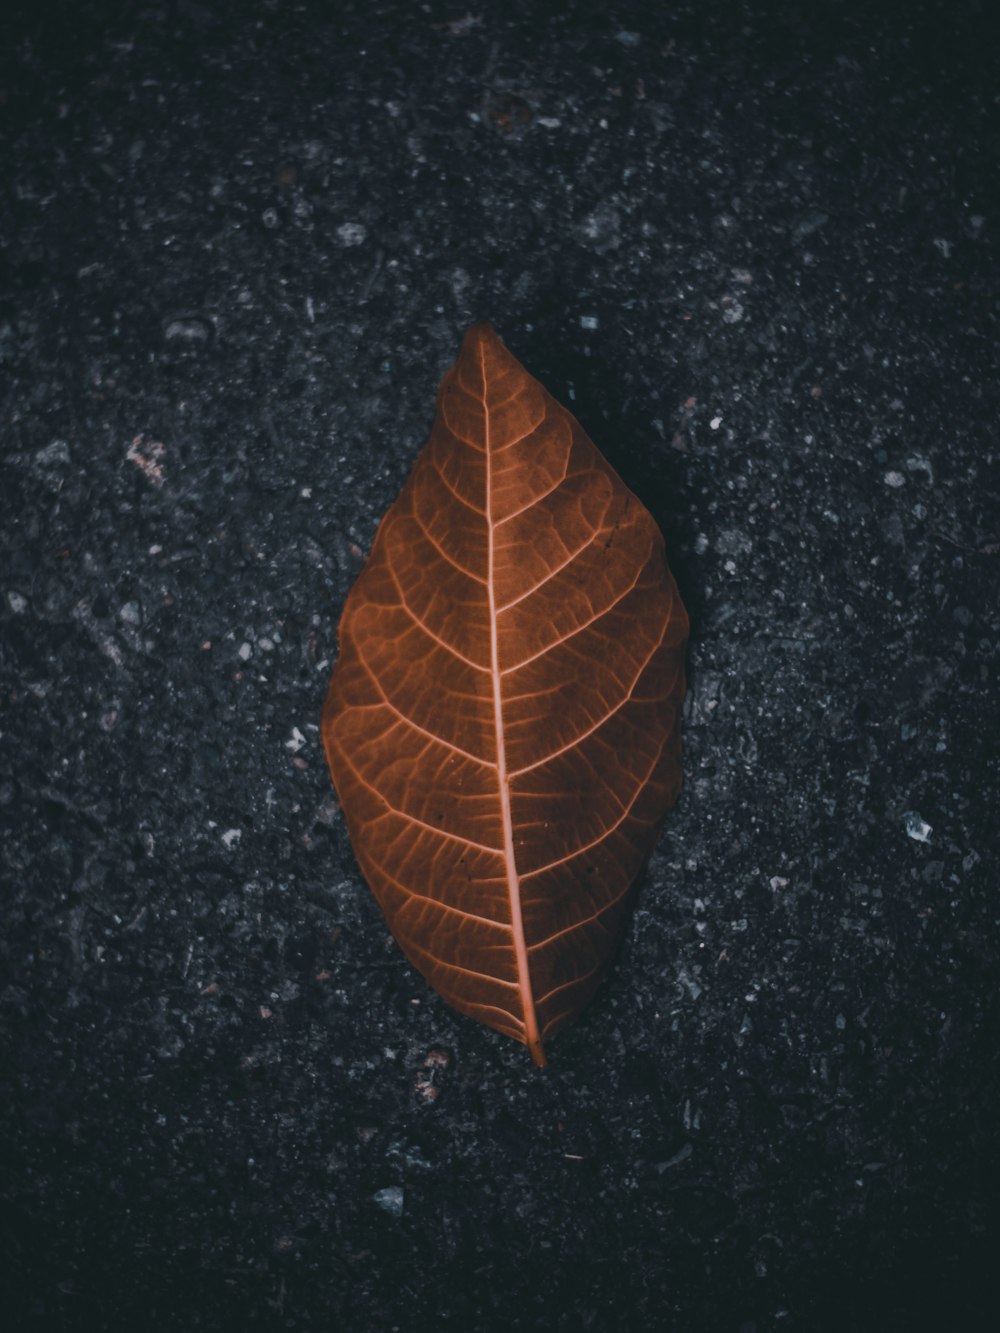 brown leaf on ground